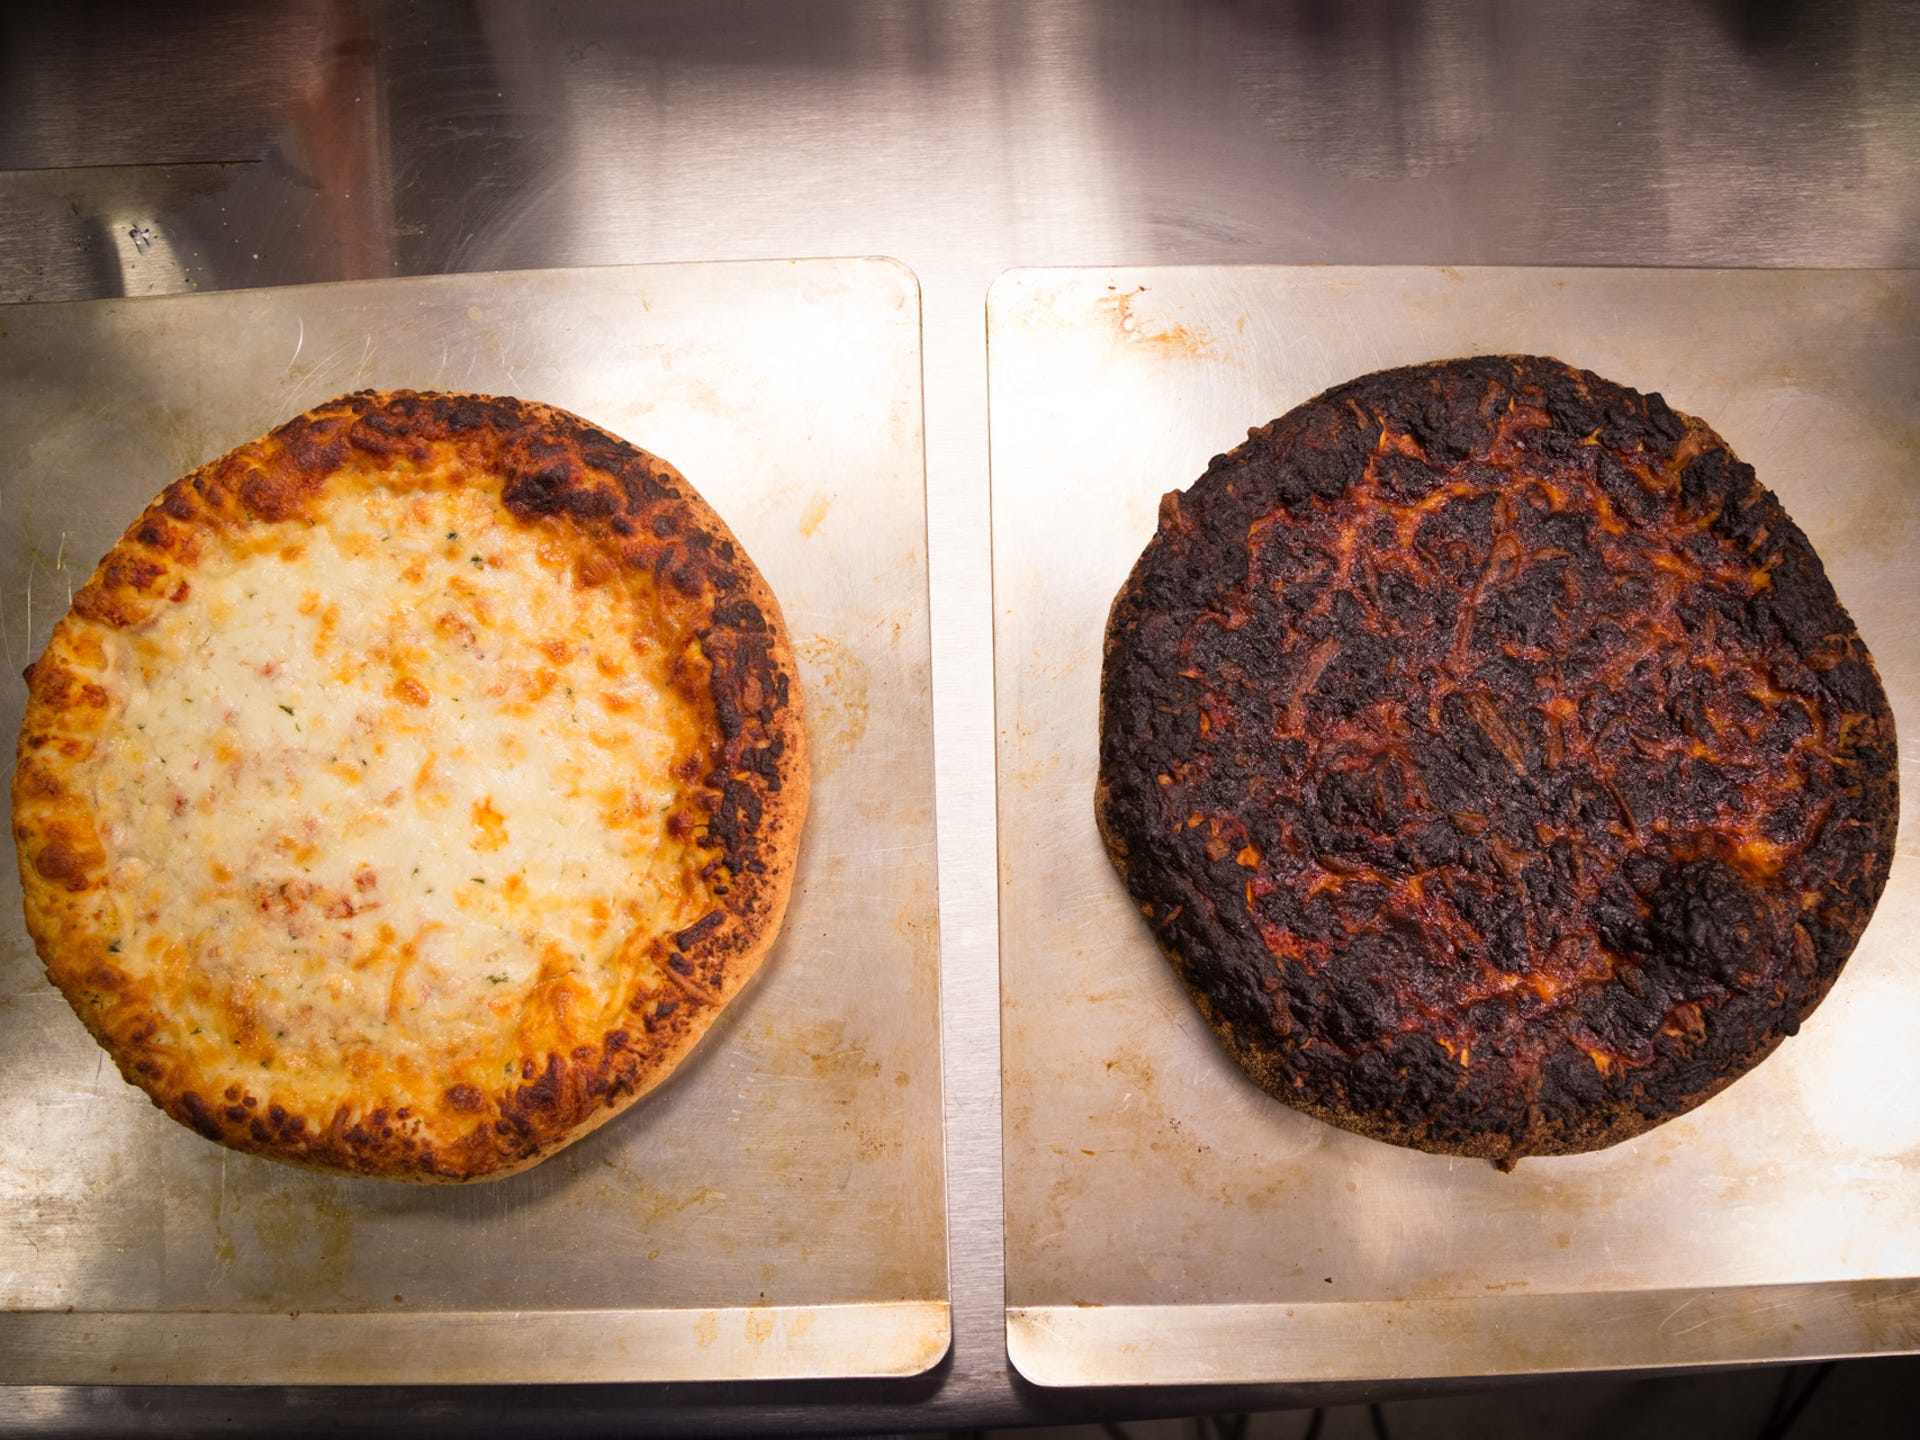 burnt-pizza-side-by-side-photo-1.jpg